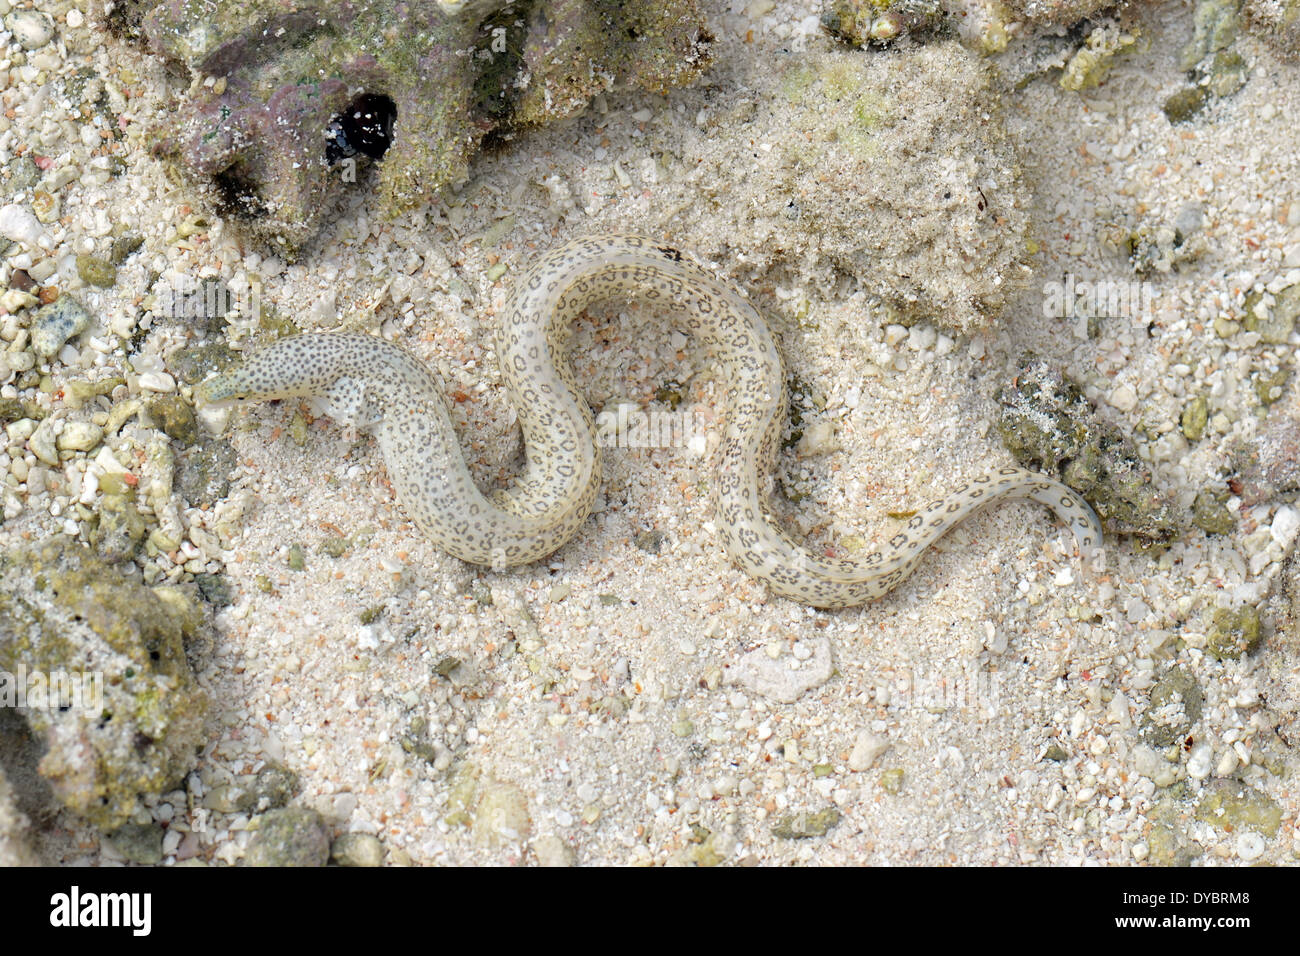 Peppered moray eel, Gymnothorax pictus, tide pool in Nukuhione islet, Wallis Island, Wallis and Futuna, Melanesia, South Pacific Stock Photo